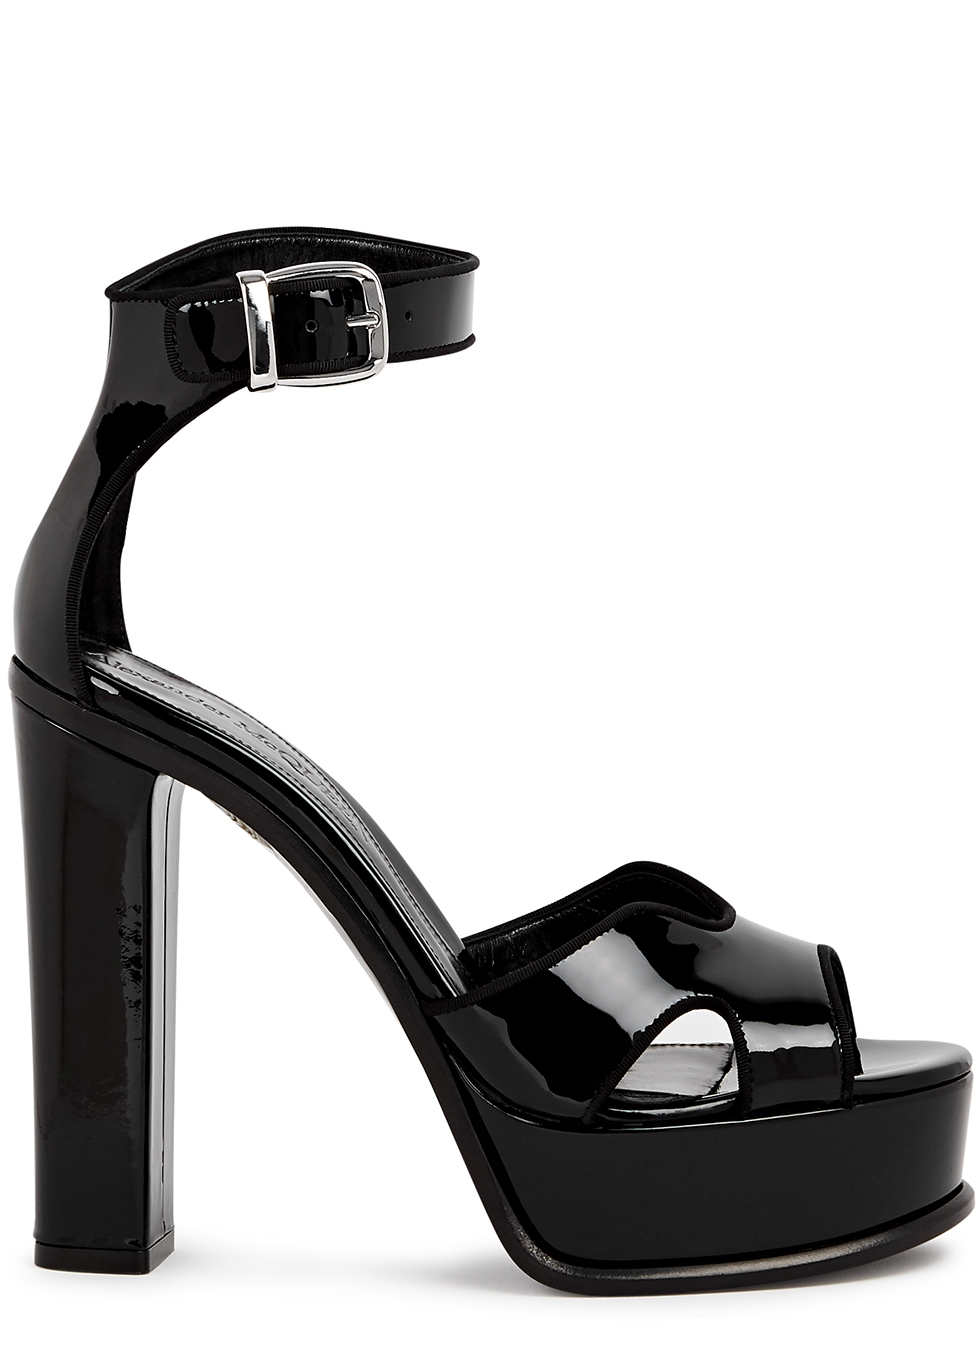 Alexander McQueen Butterfly 125 black patent leather platform sandals